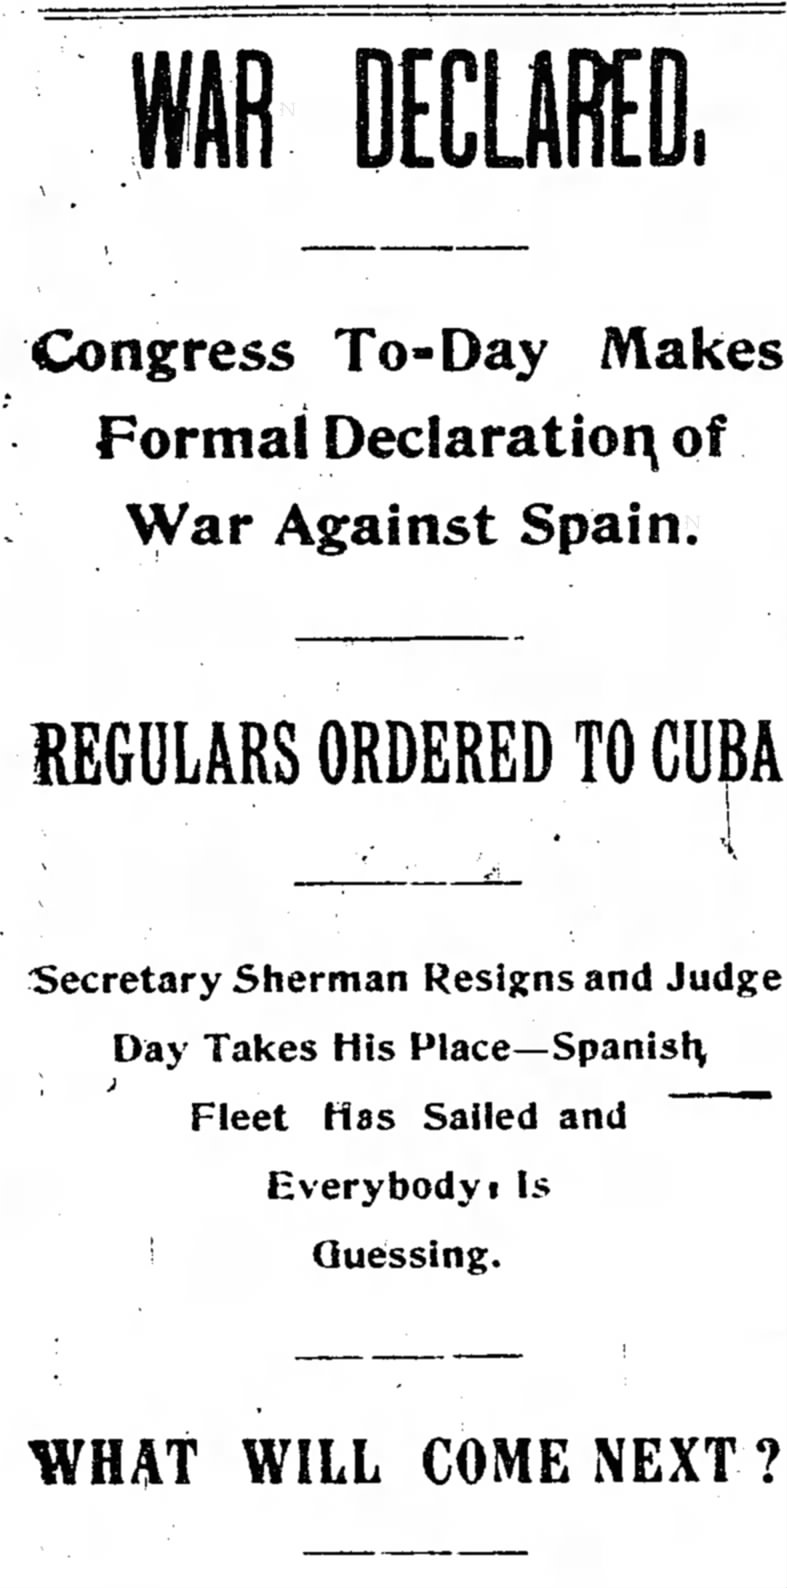 War declared again Spain in the Spanish-American War